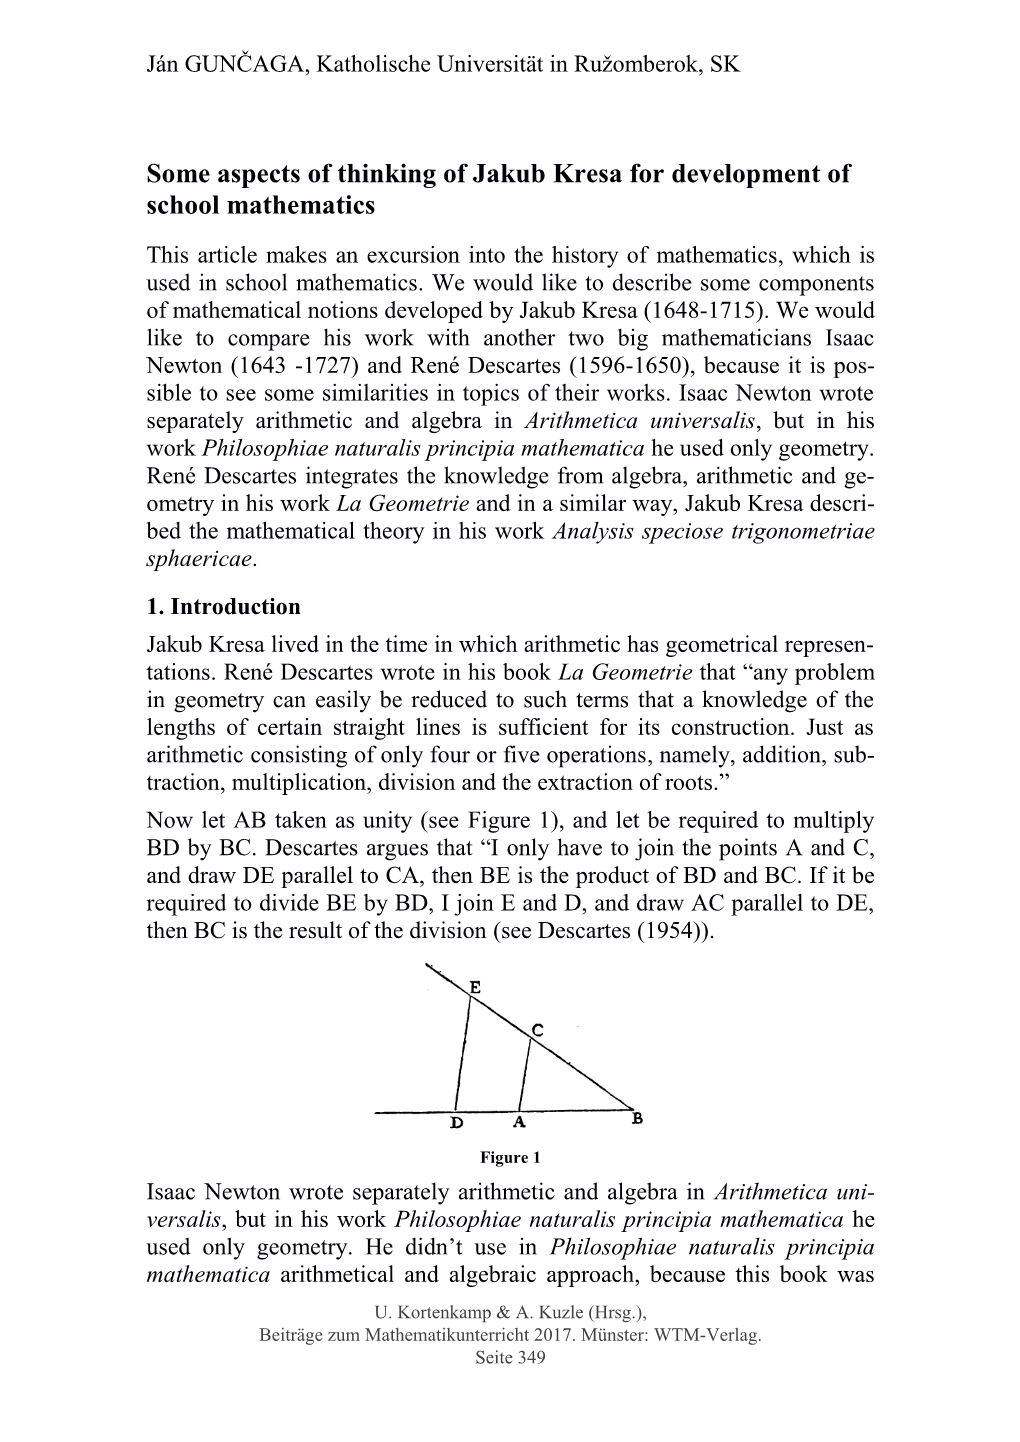 Some Aspects of Thinking of Jakub Kresa for Development of School Mathematics